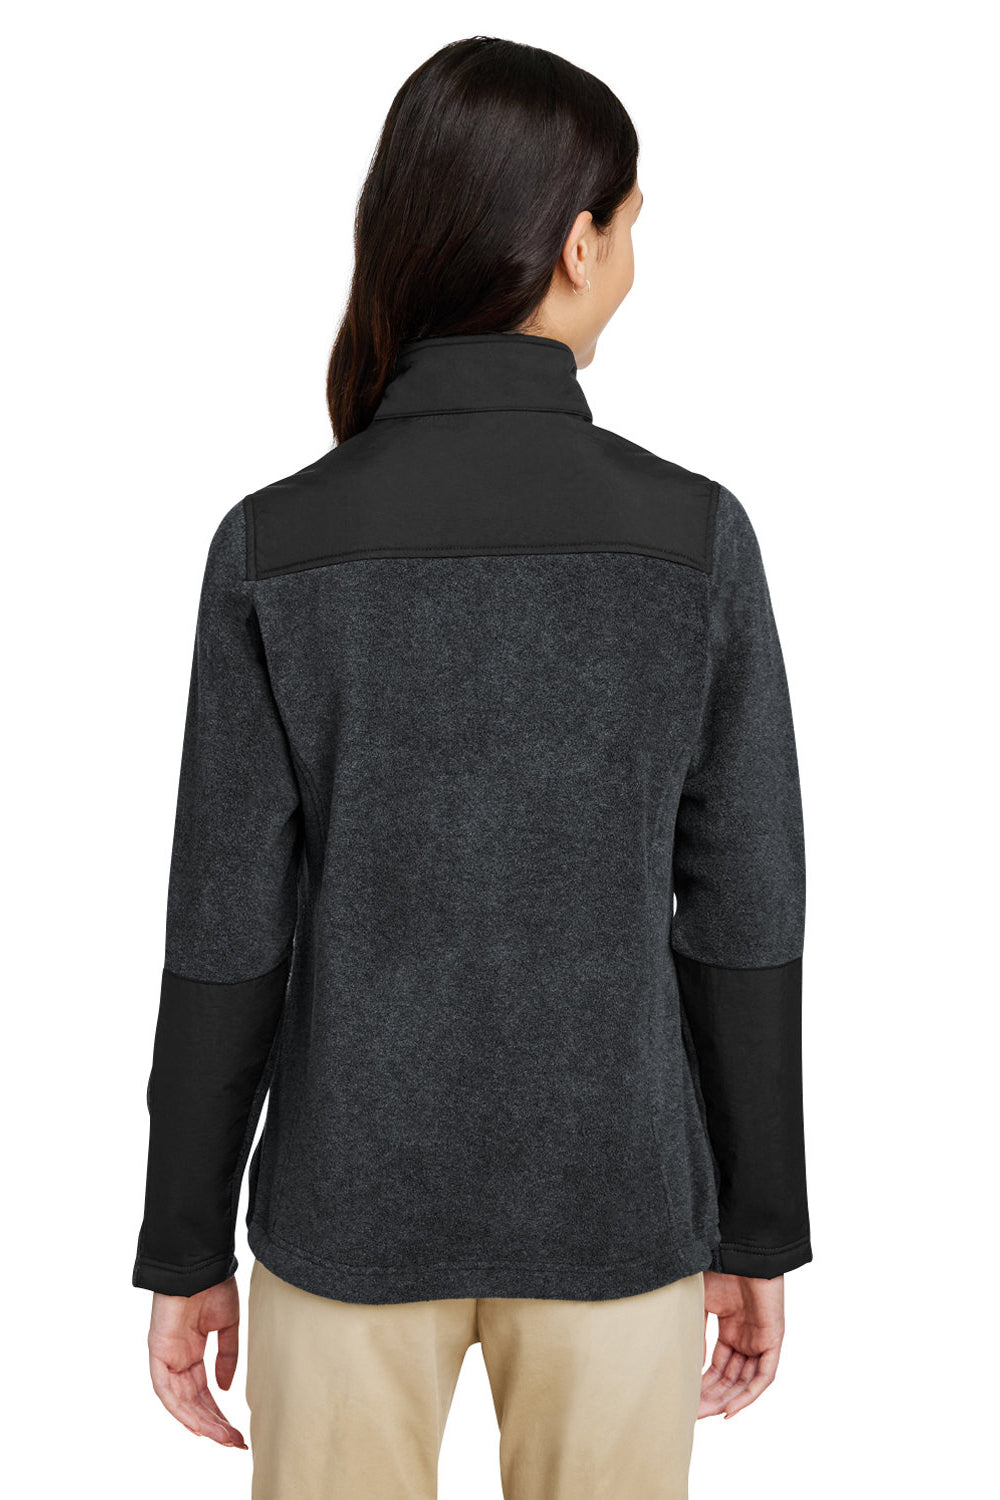 Core 365 CE890W Womens Journey Summit Hybrid Full Zip Jacket Heather Charcoal Grey/Black Back